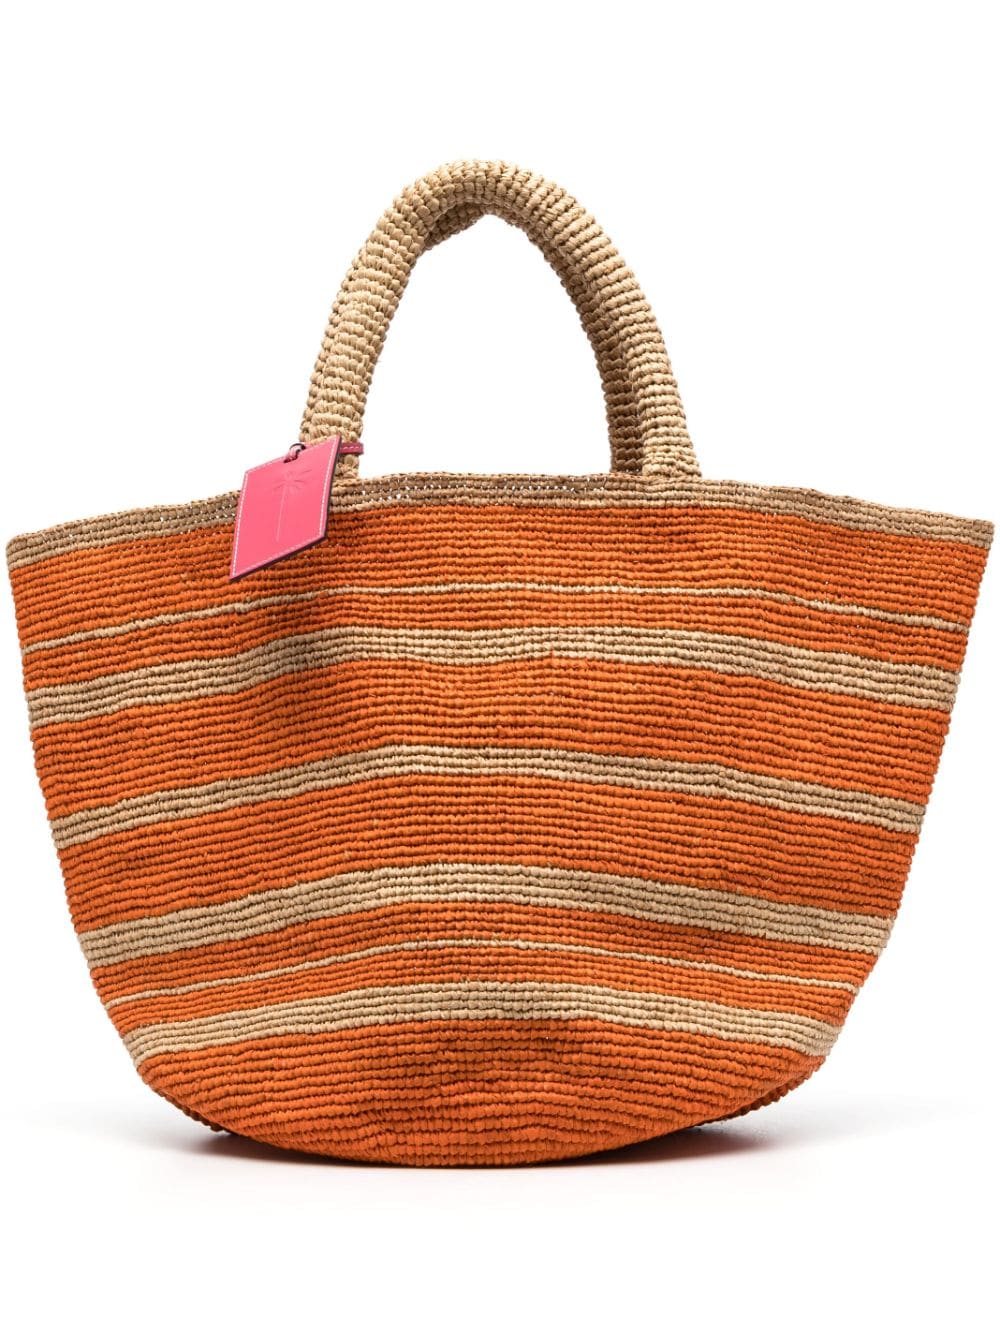 Manebi - horizontal-stripes raffia beach bag - women - Calf Leather/Raffia - One Size - Orange